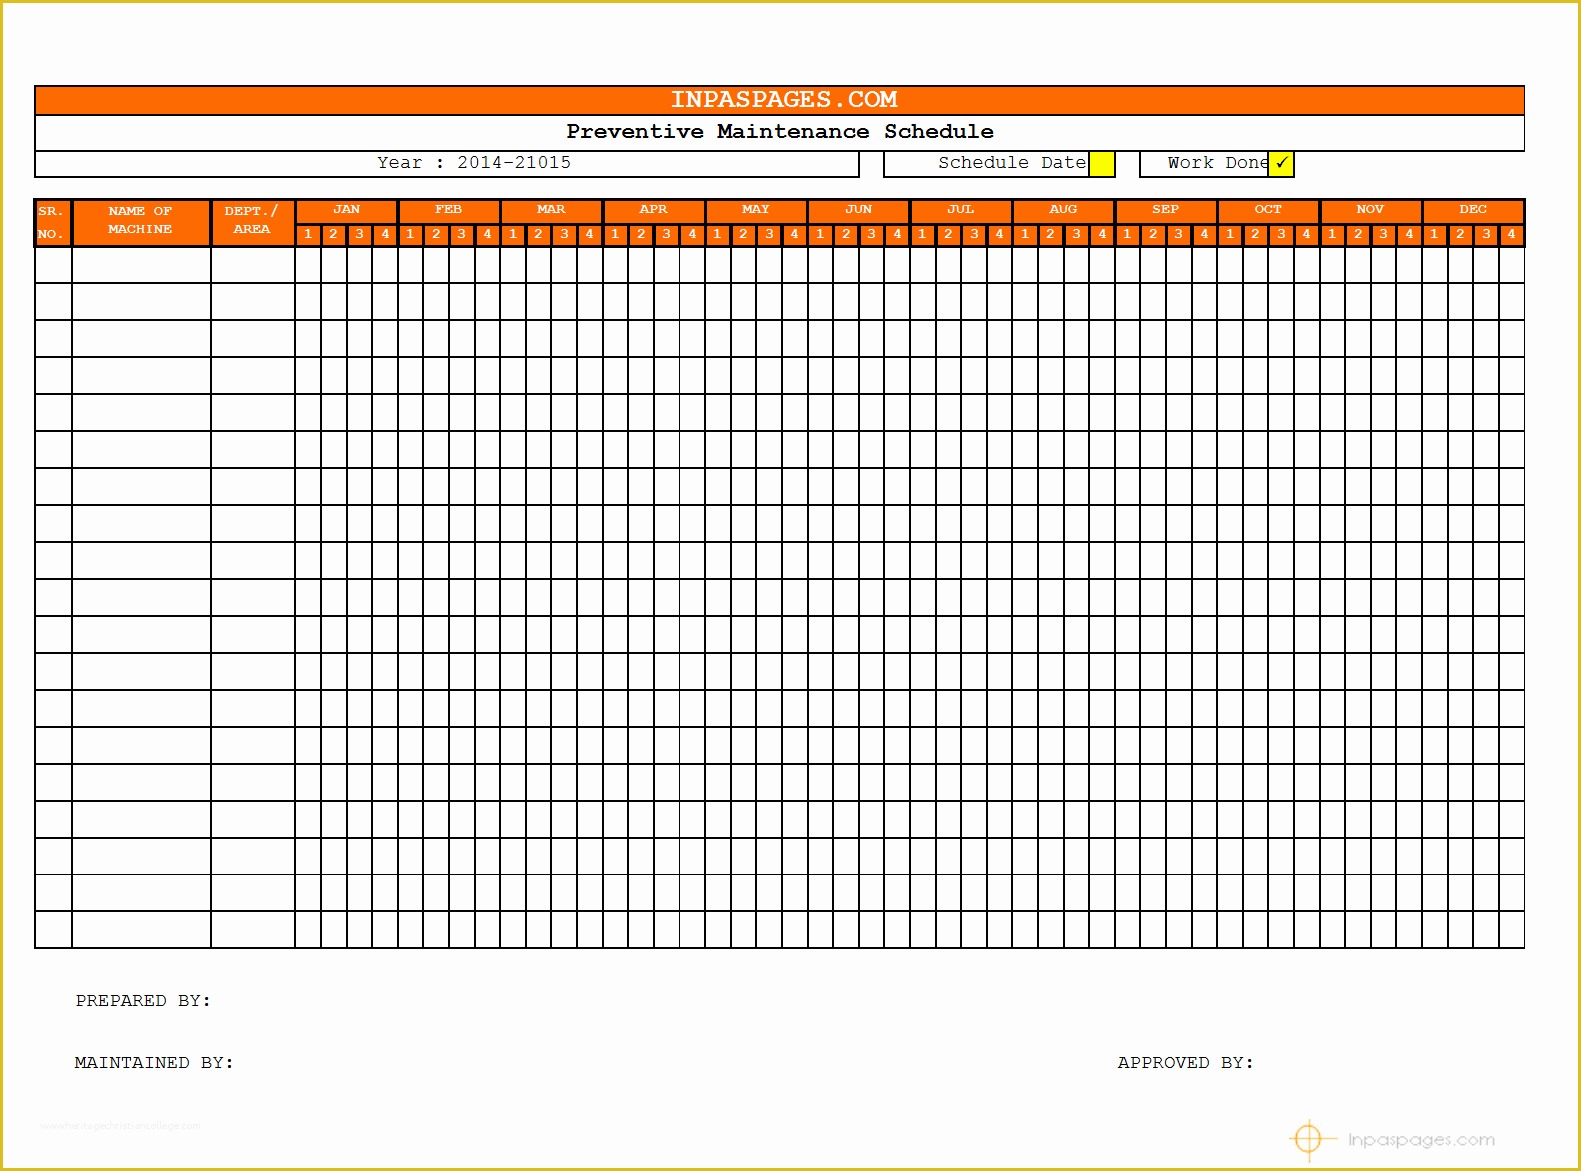 Preventive Maintenance Schedule Template Excel Free Of Free Preventive Maintenance Schedule Template